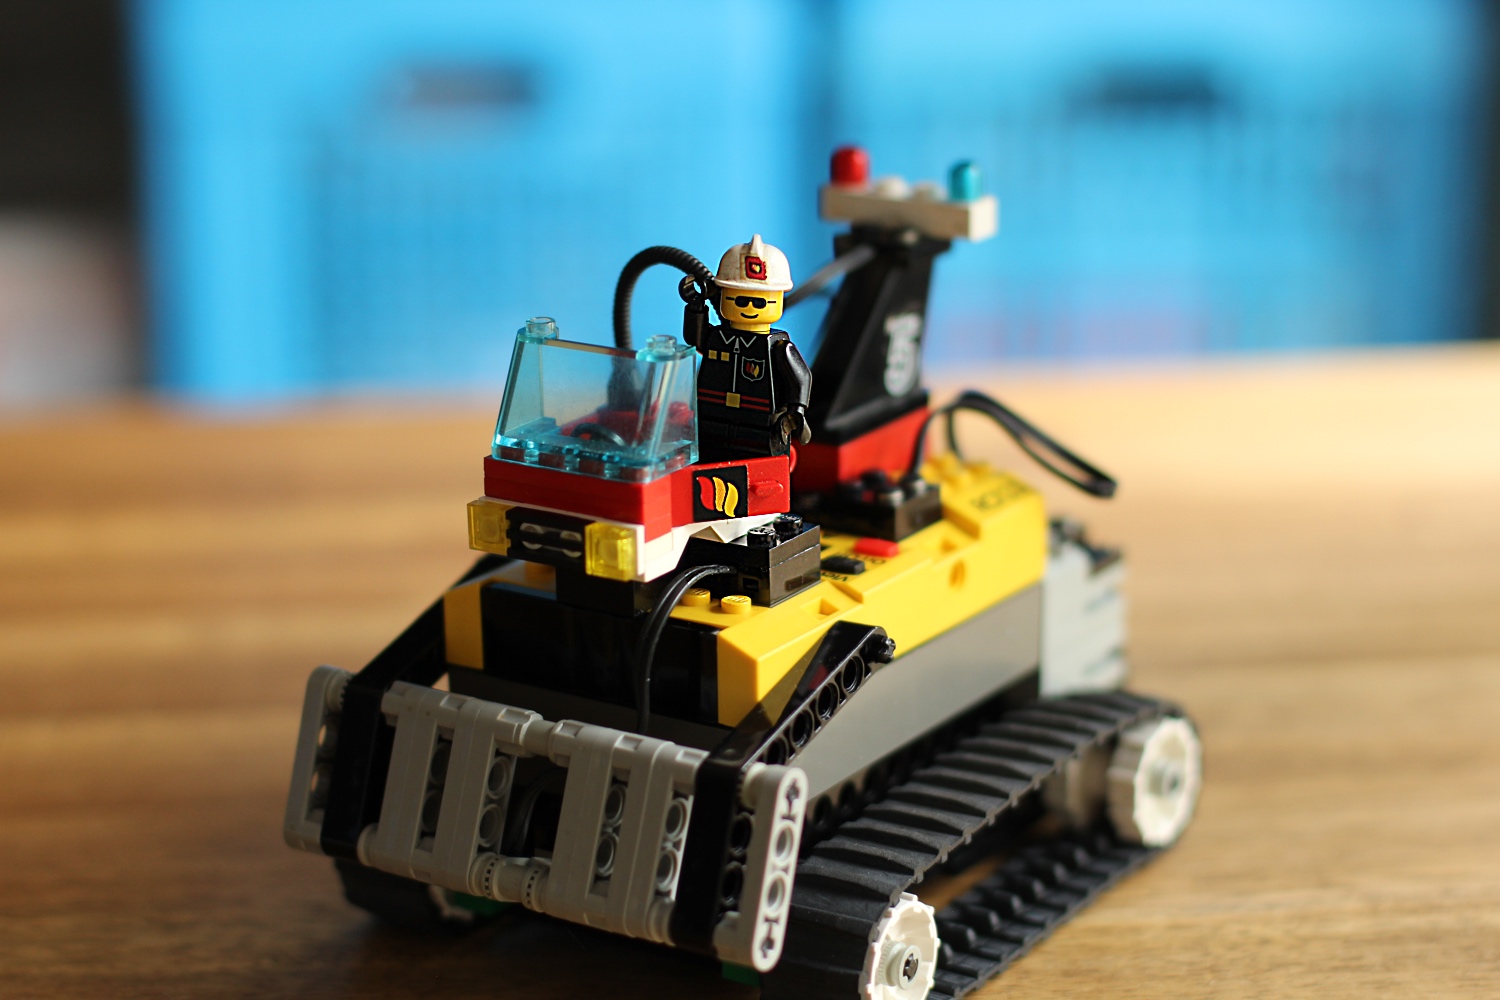 Lego MindStorms RCX 2.0 - Fire truck